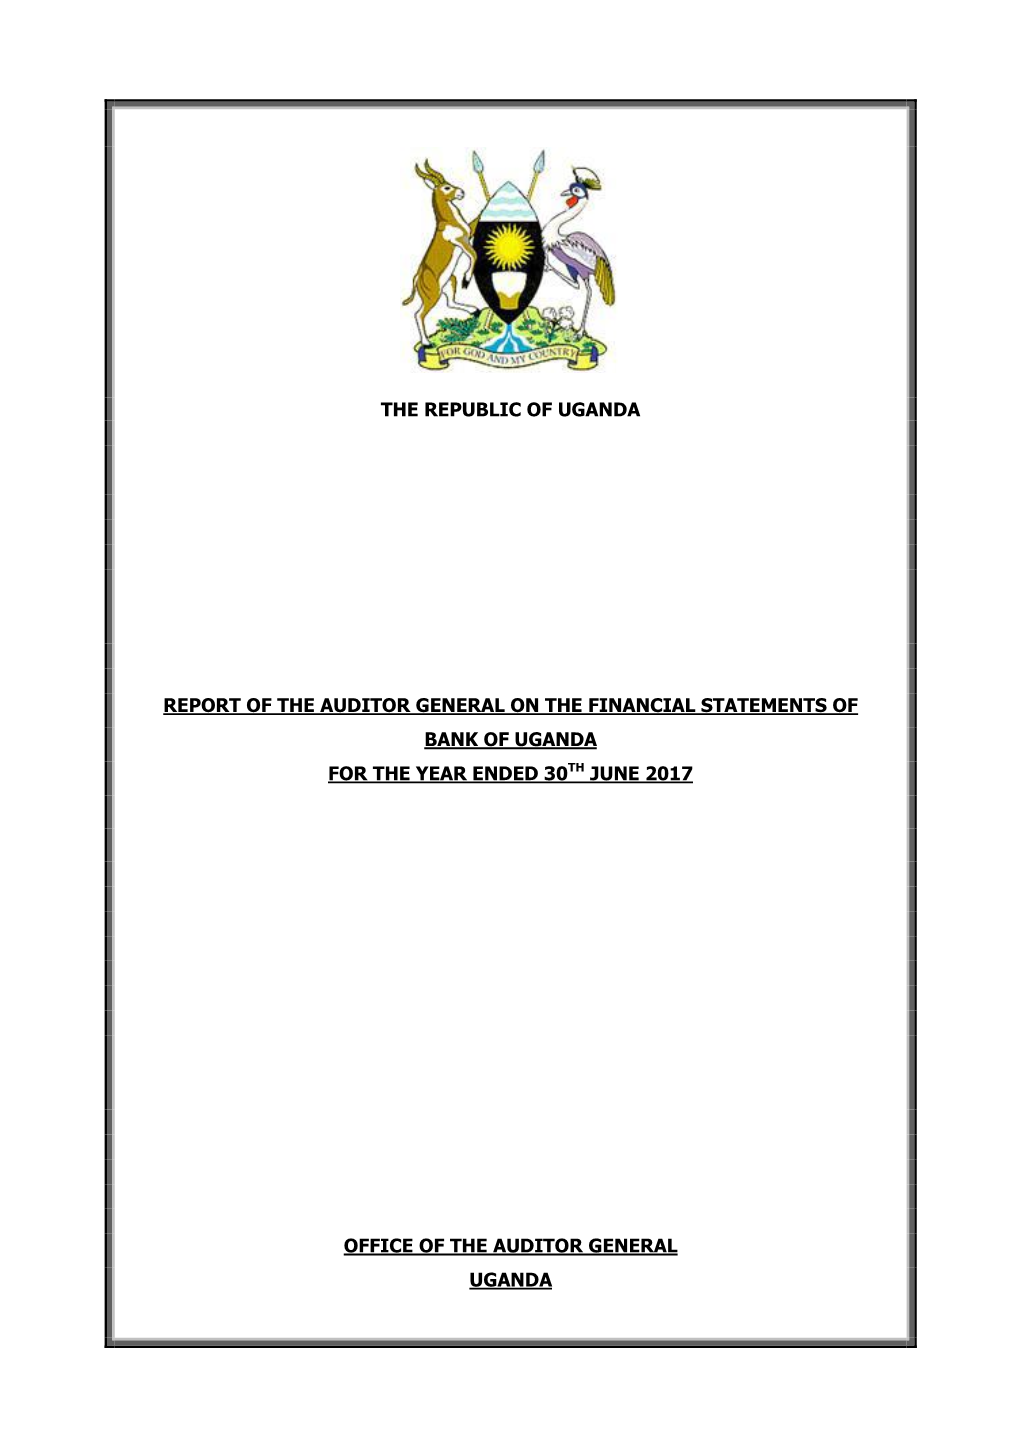 The Republic of Uganda Report of the Auditor